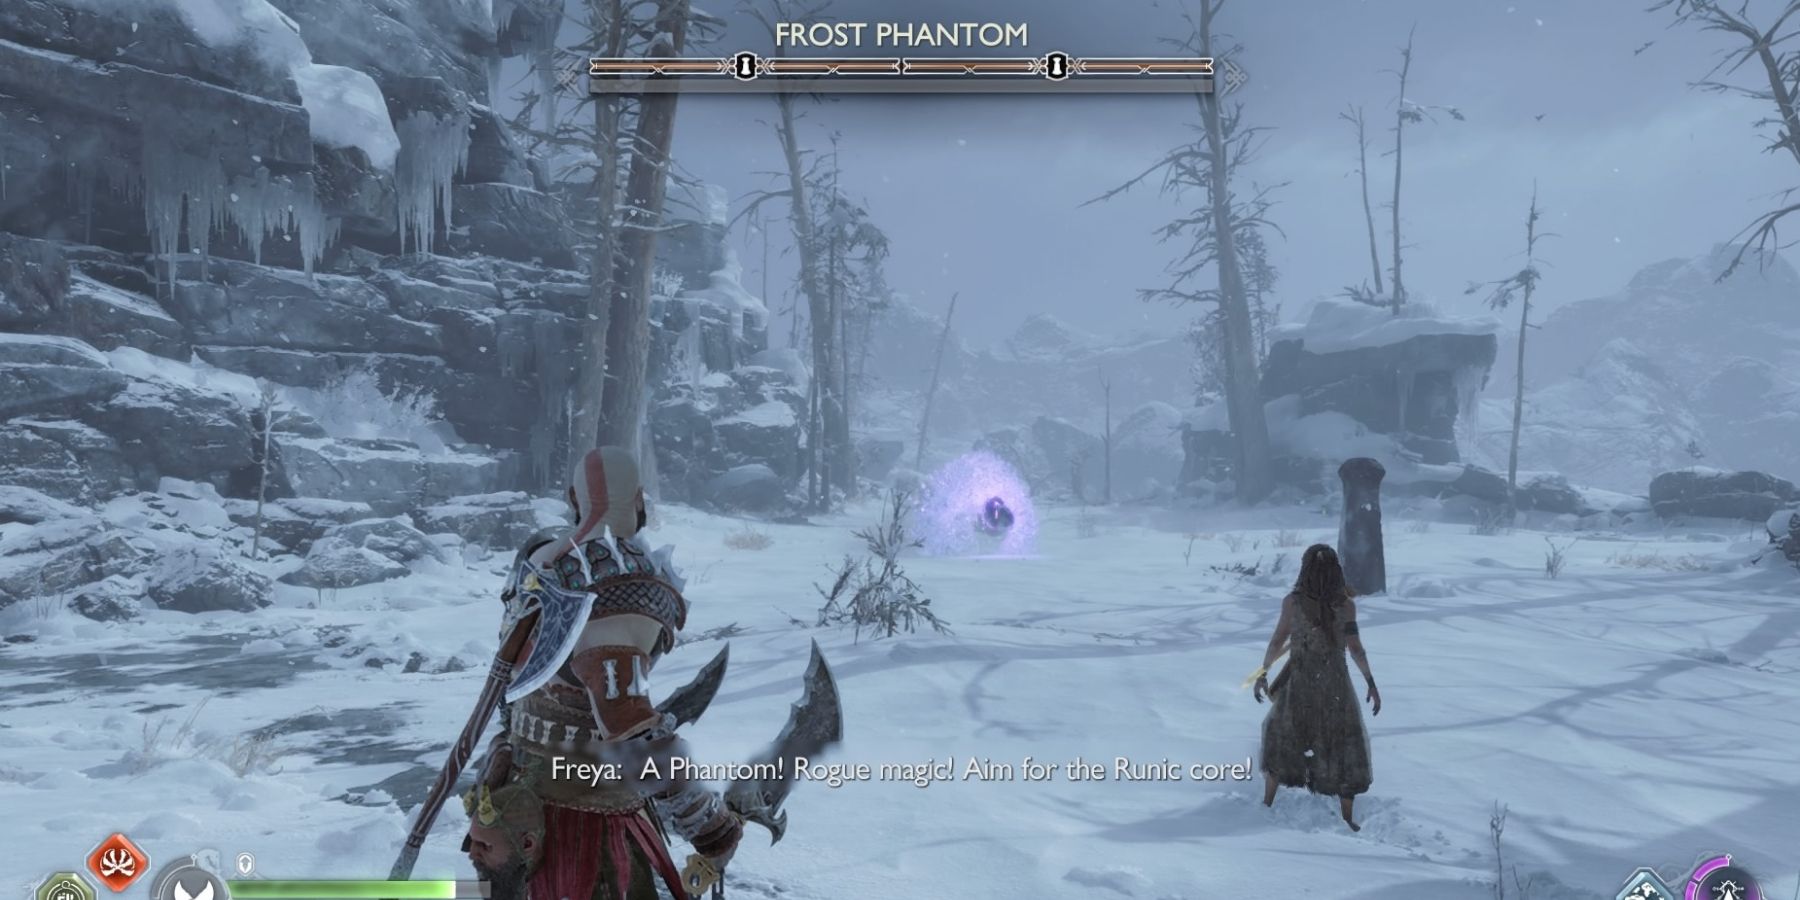 Kratos and Freya face the Frost Phantom